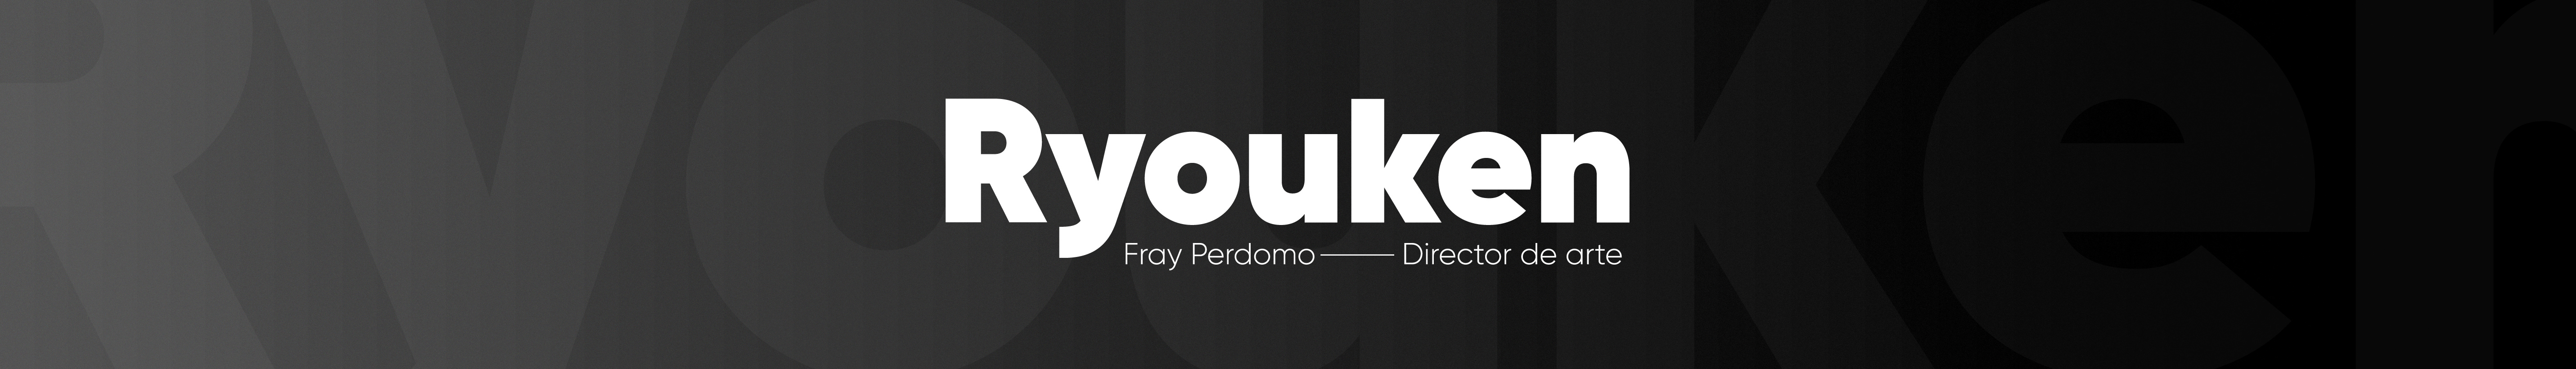 Fray Junior Perdomo's profile banner